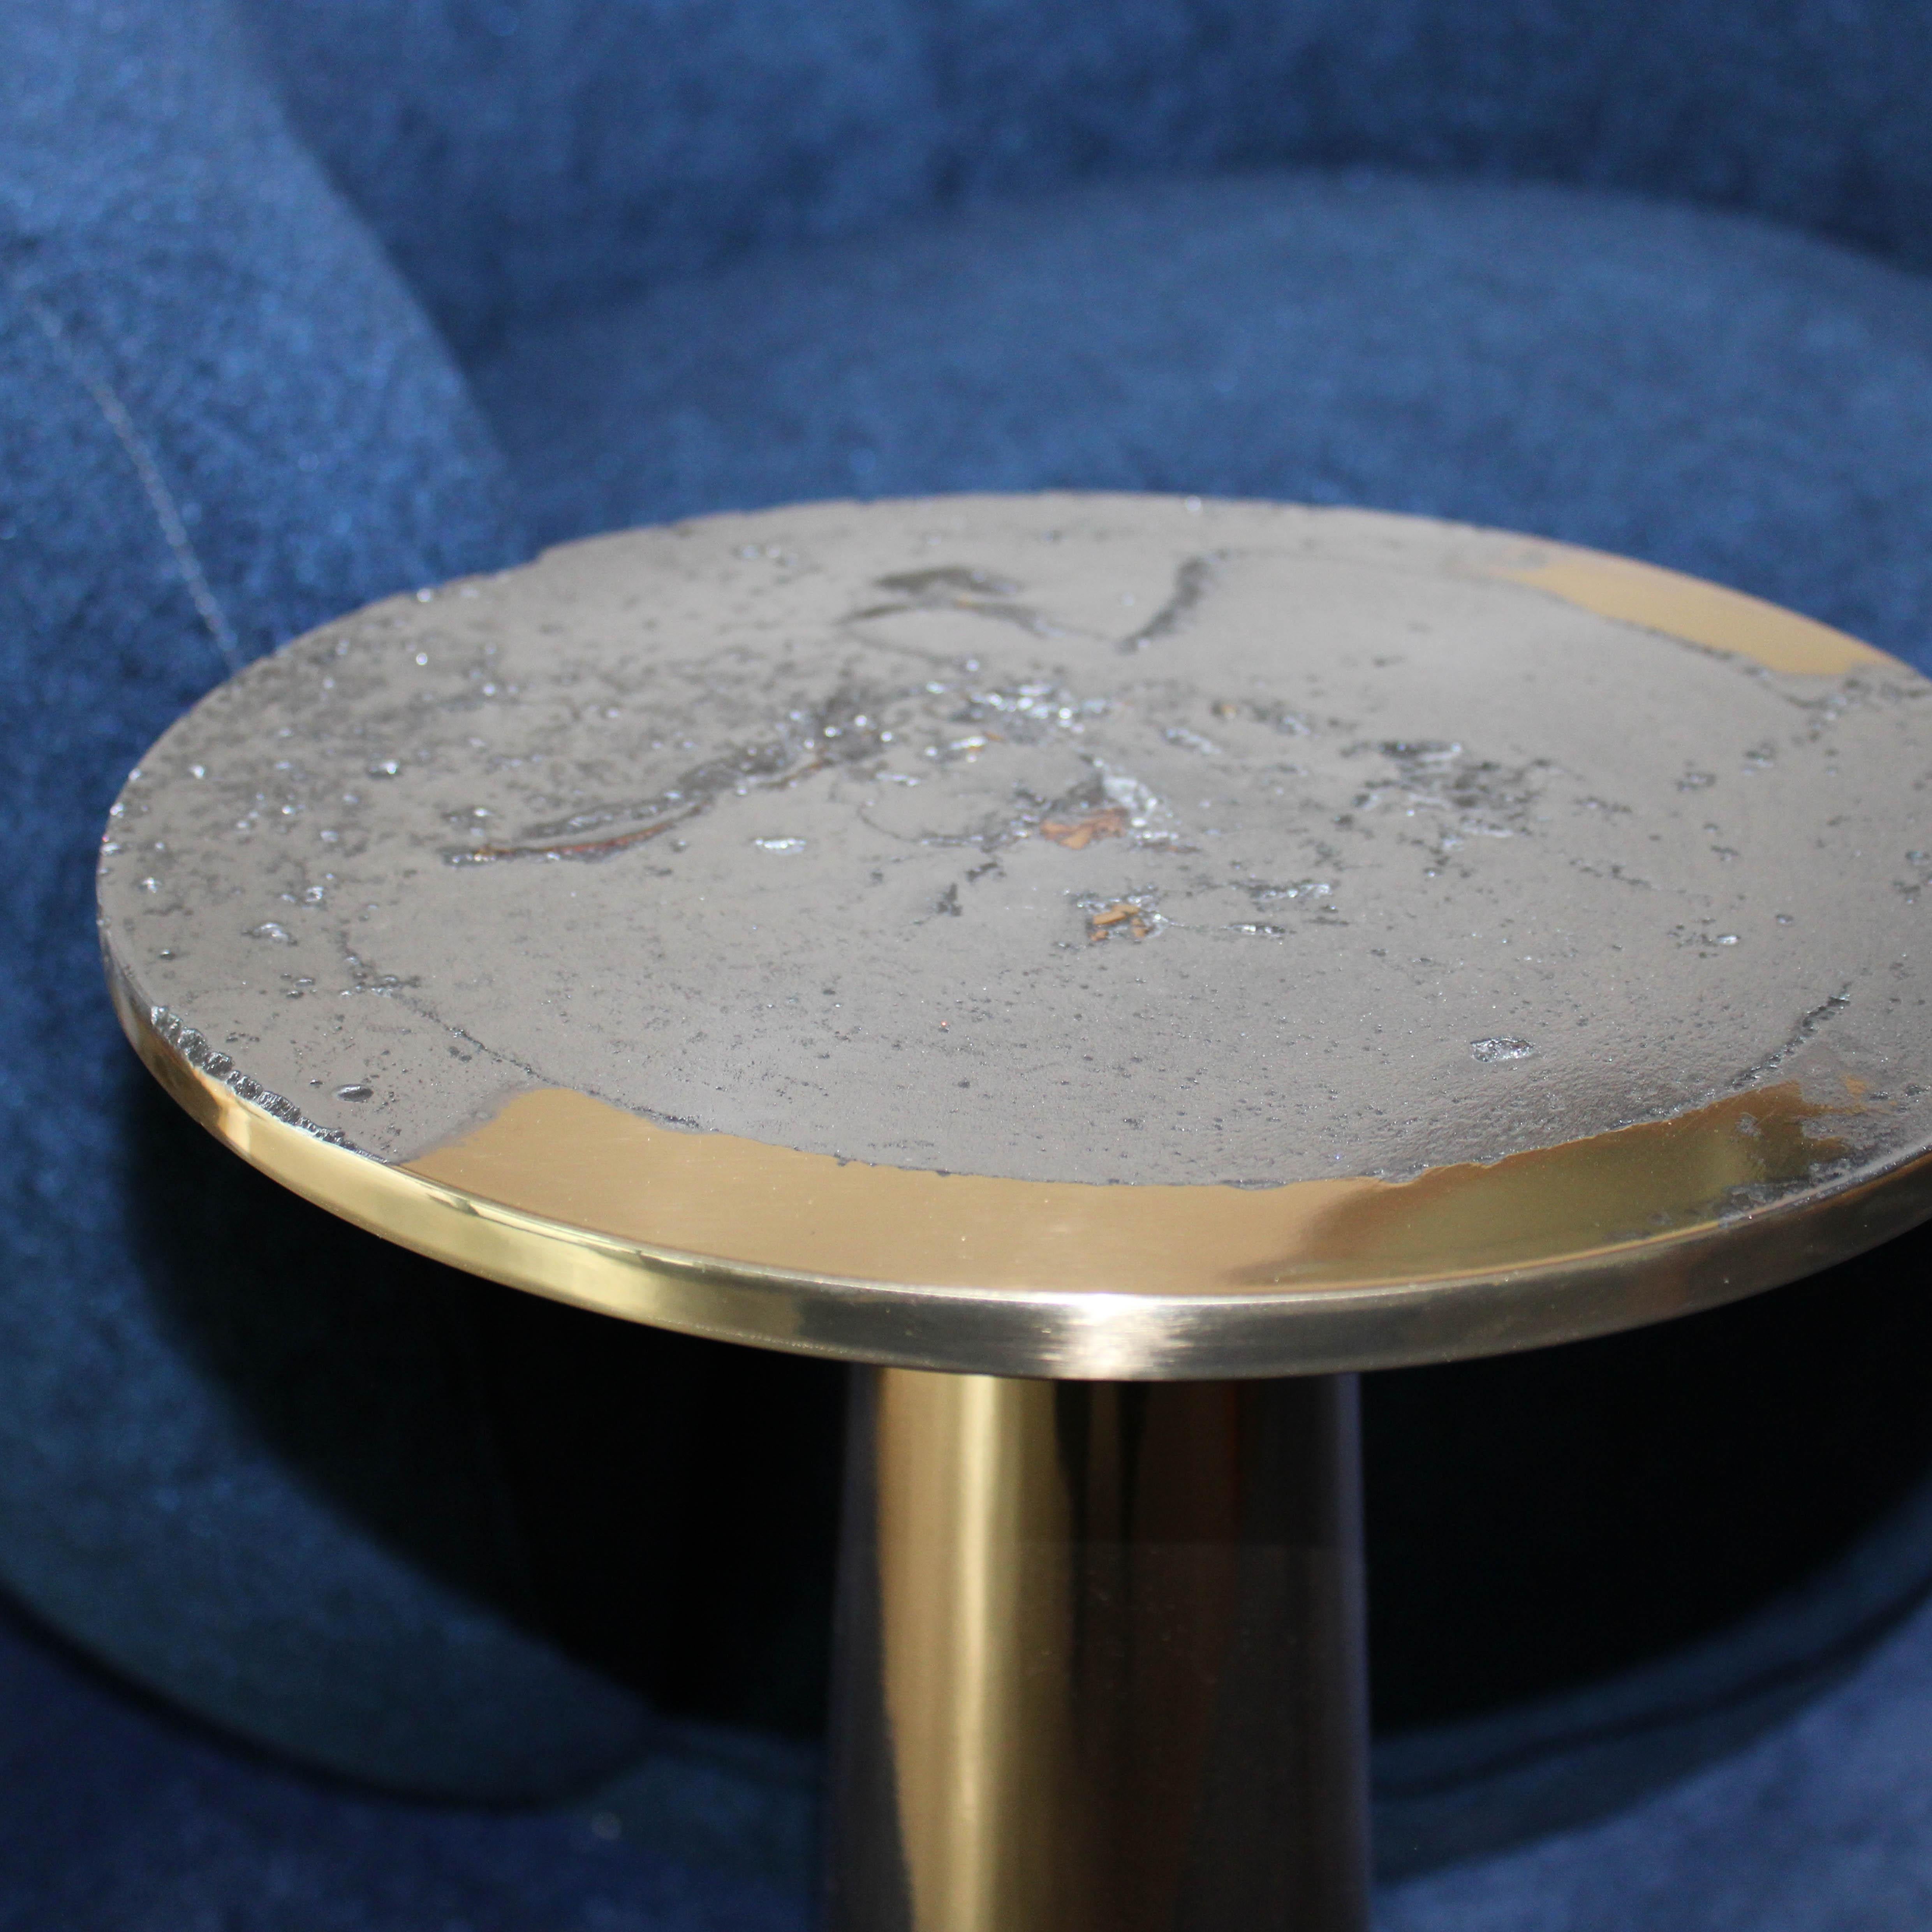 Cast Bronze & Aluminum Cone Side Table by Studio Sunt For Sale 3